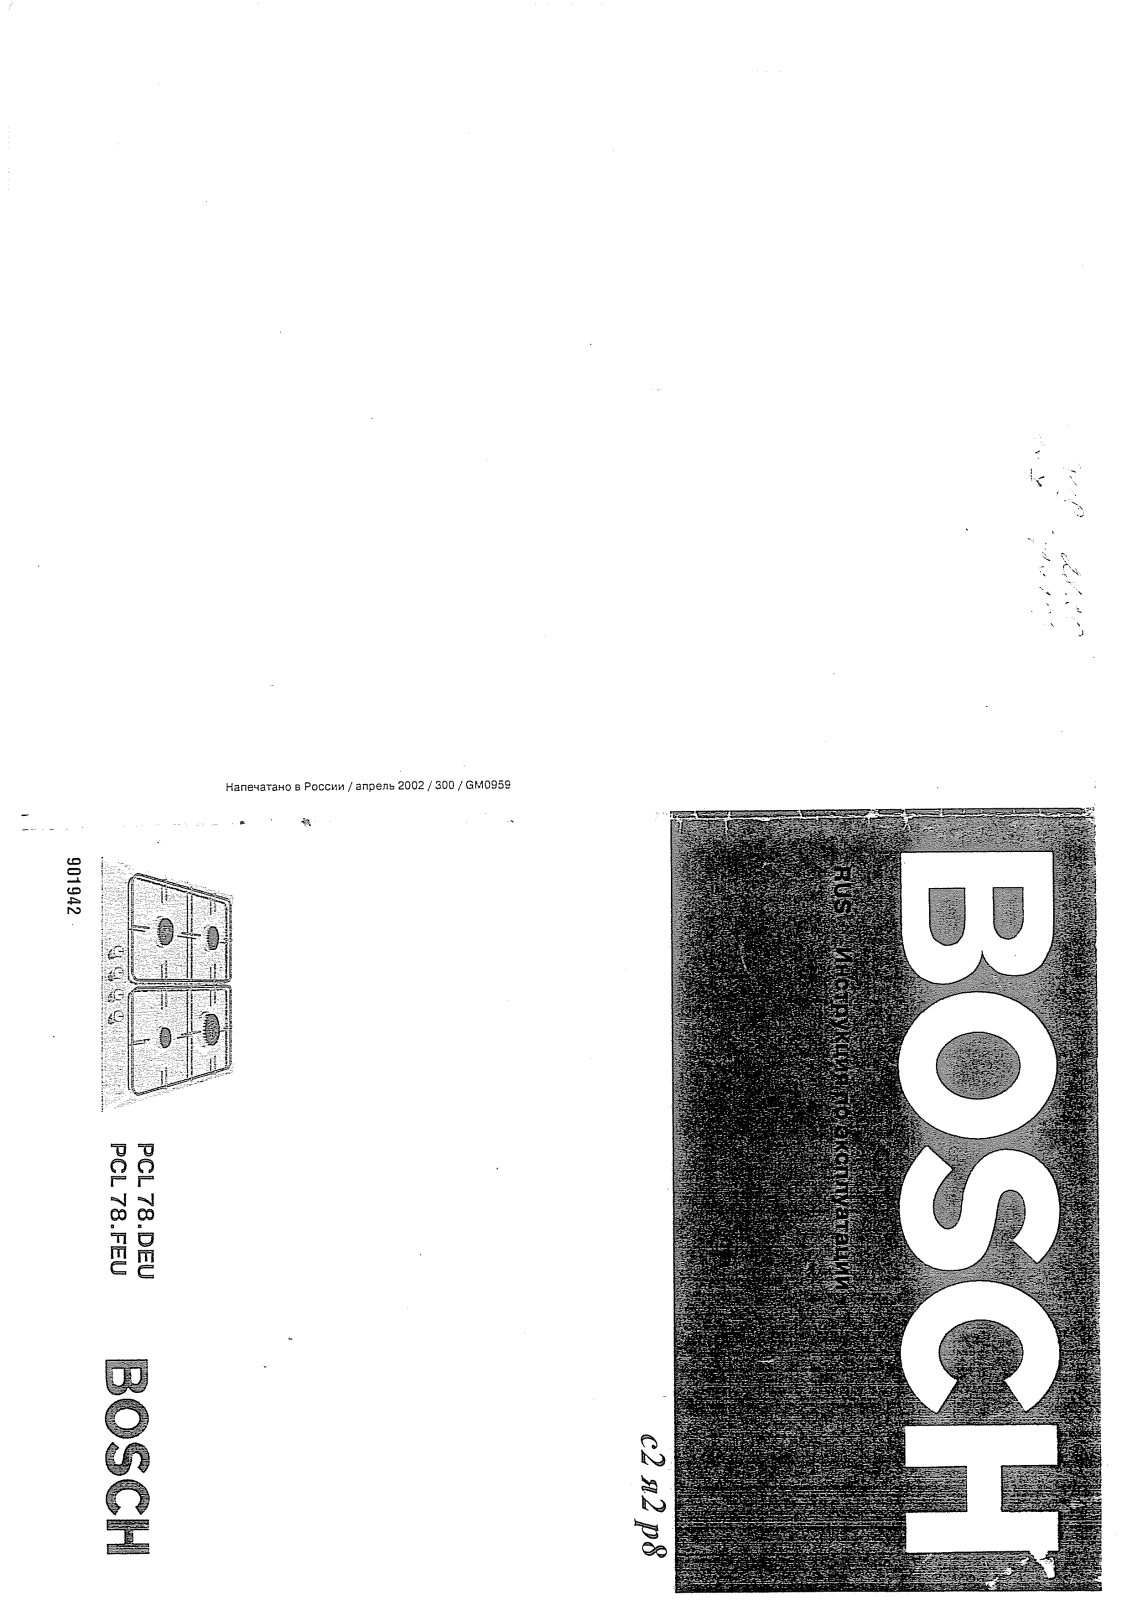 Bosch PCL 785 DEU User Manual